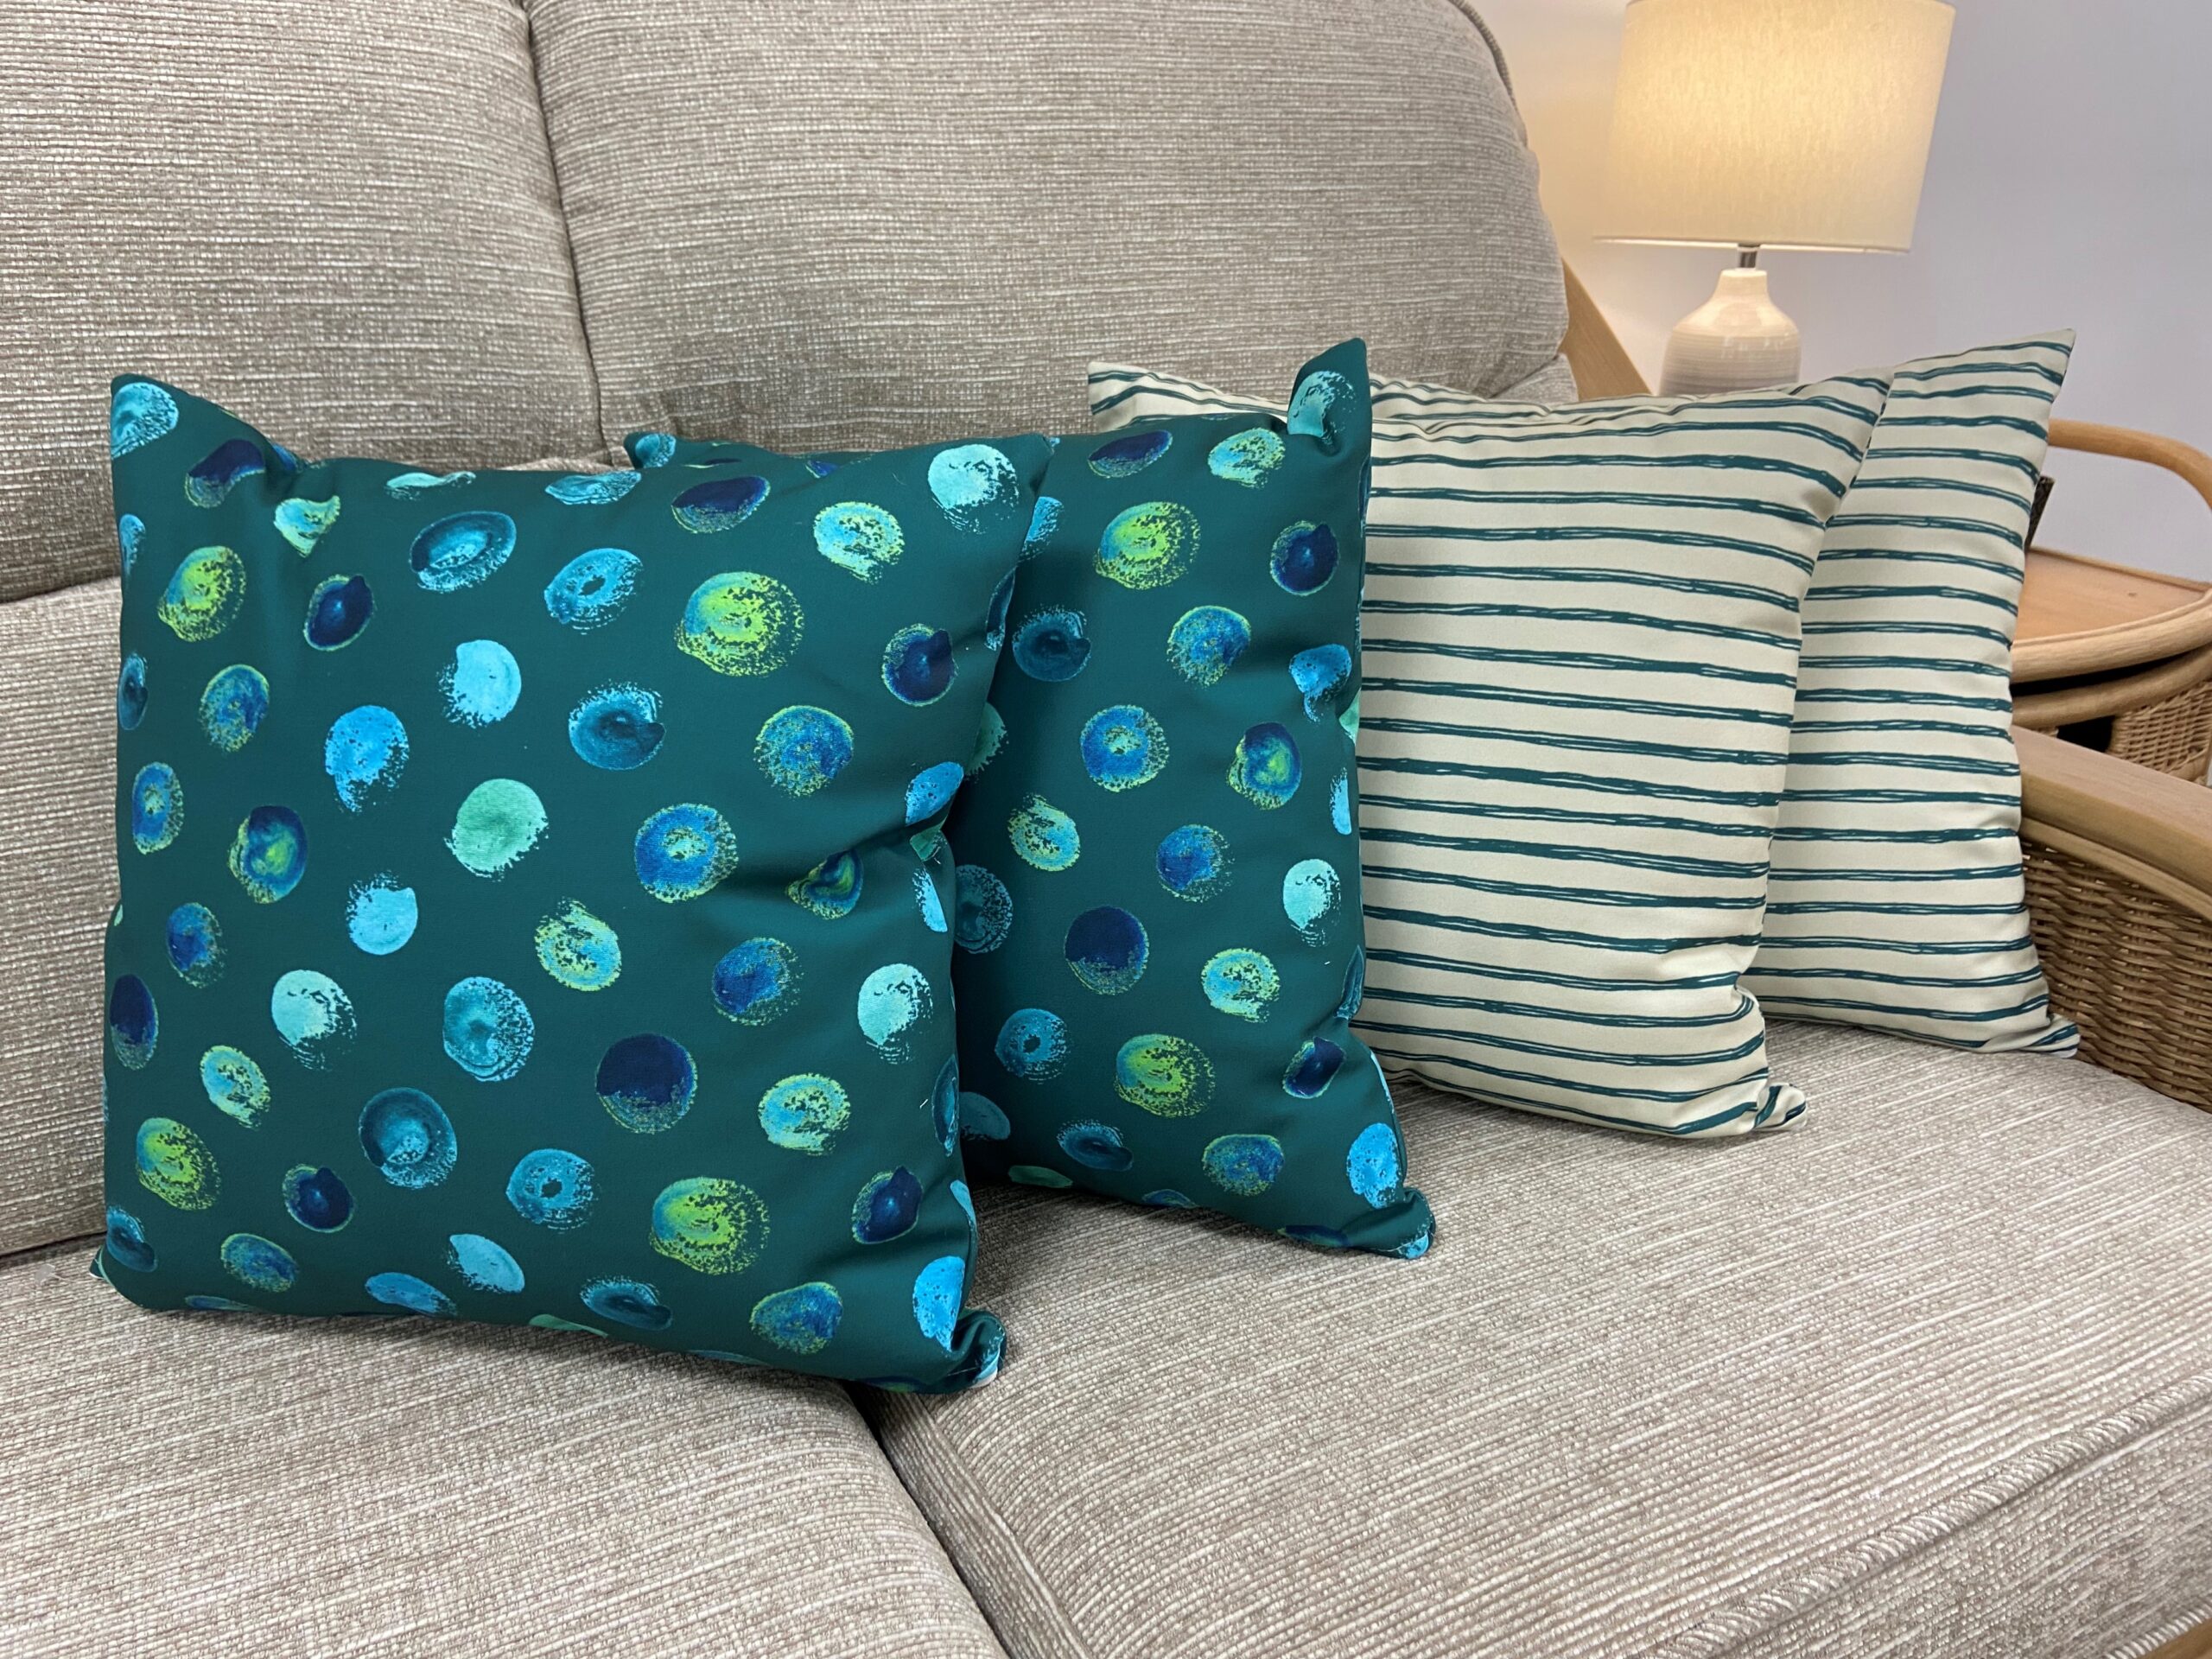 Indoor Scatter Cushion Bundle x 4 - Green Spots & Stripes